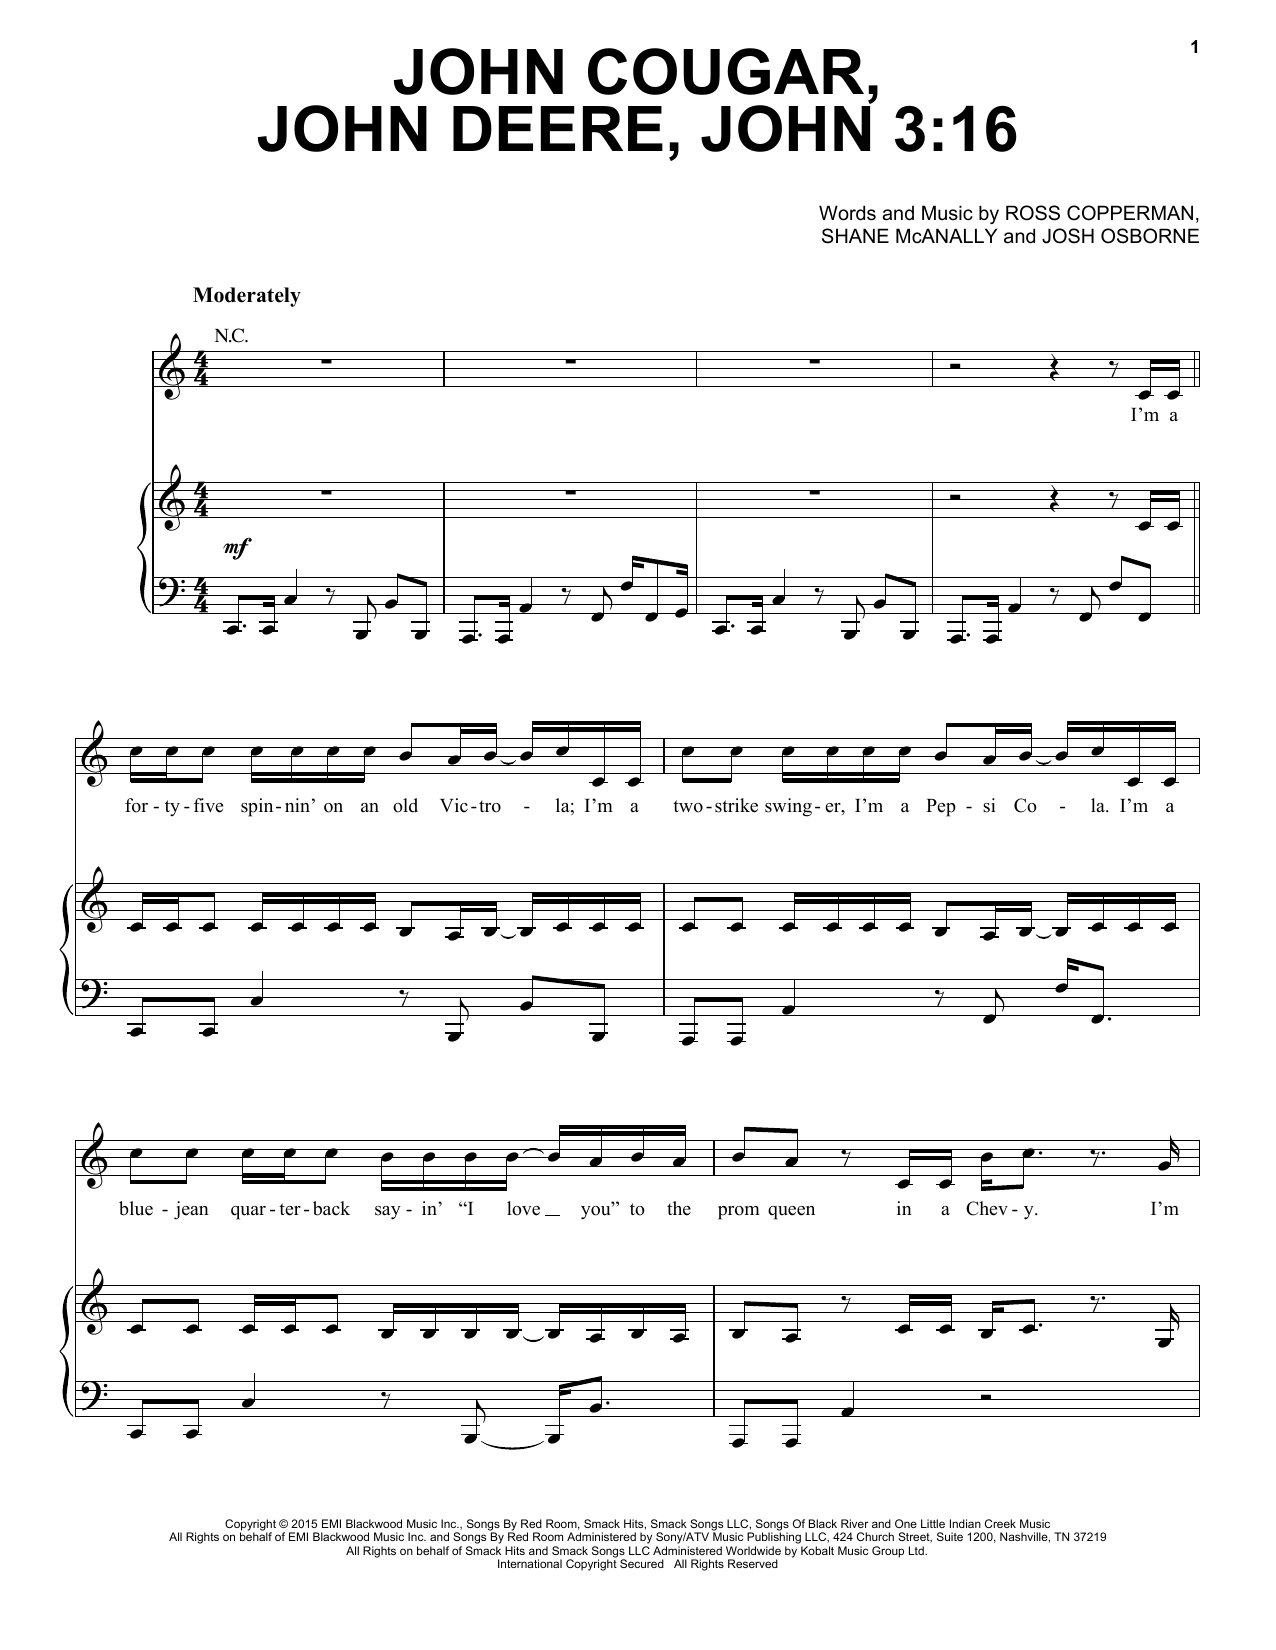 Keith Urban John Cougar, John Deere, John 3:16 Sheet Music Notes & Chords for Piano, Vocal & Guitar (Right-Hand Melody) - Download or Print PDF